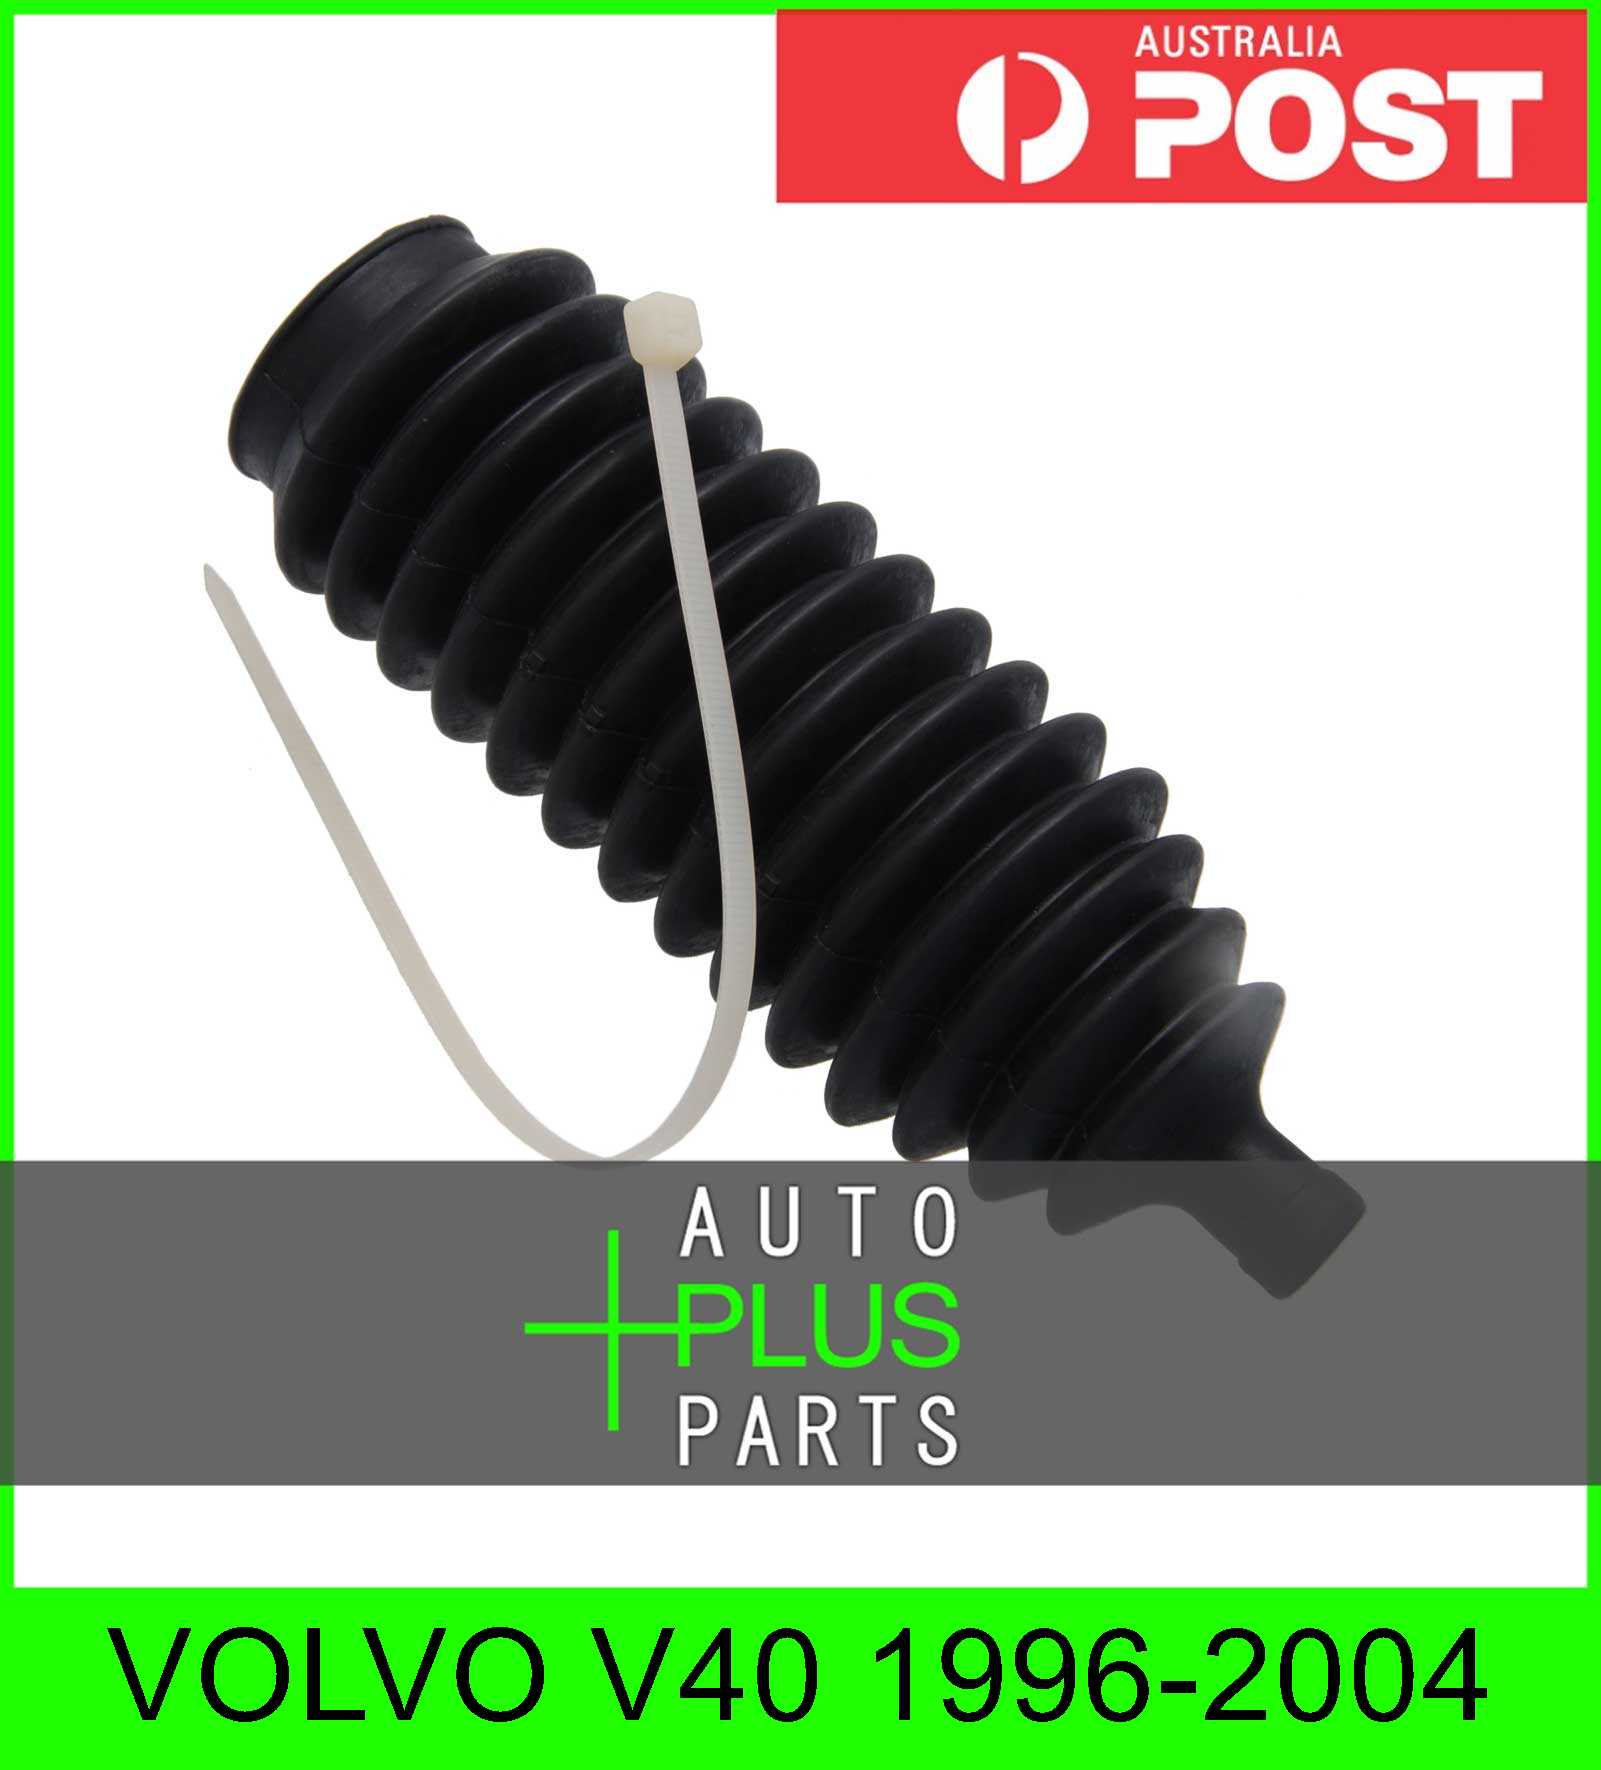 Fits VOLVO V40 Steering Rack End Boot Rubber